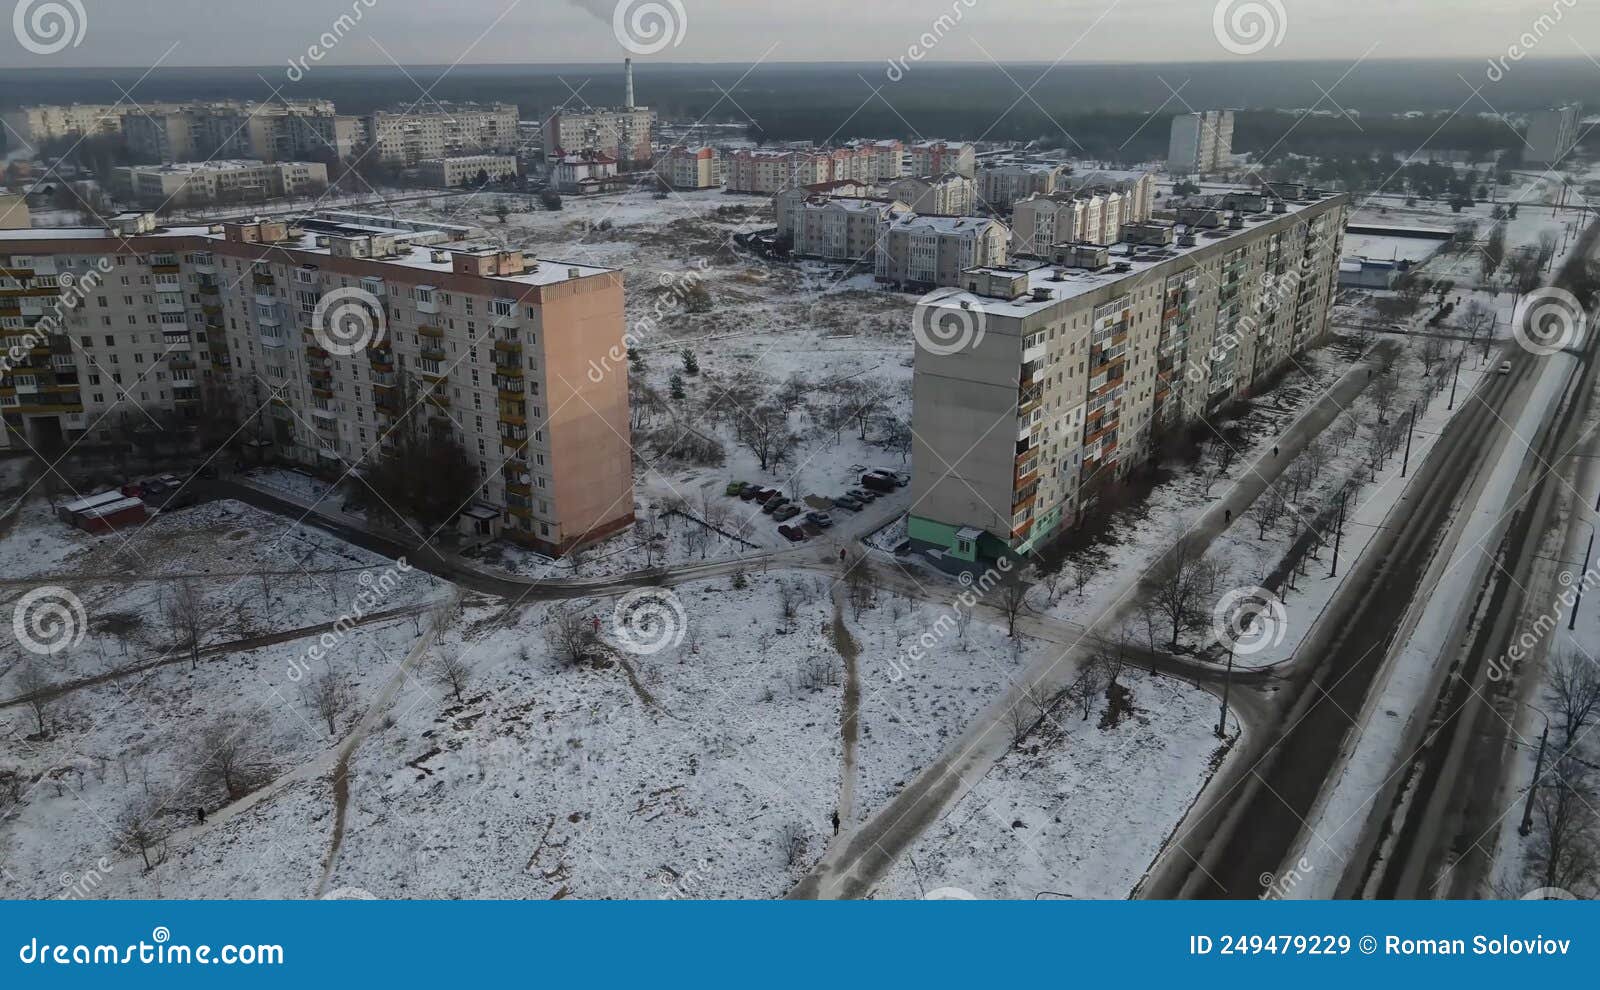 sievierodonetsk. top view. ukrainian city in lugansk region